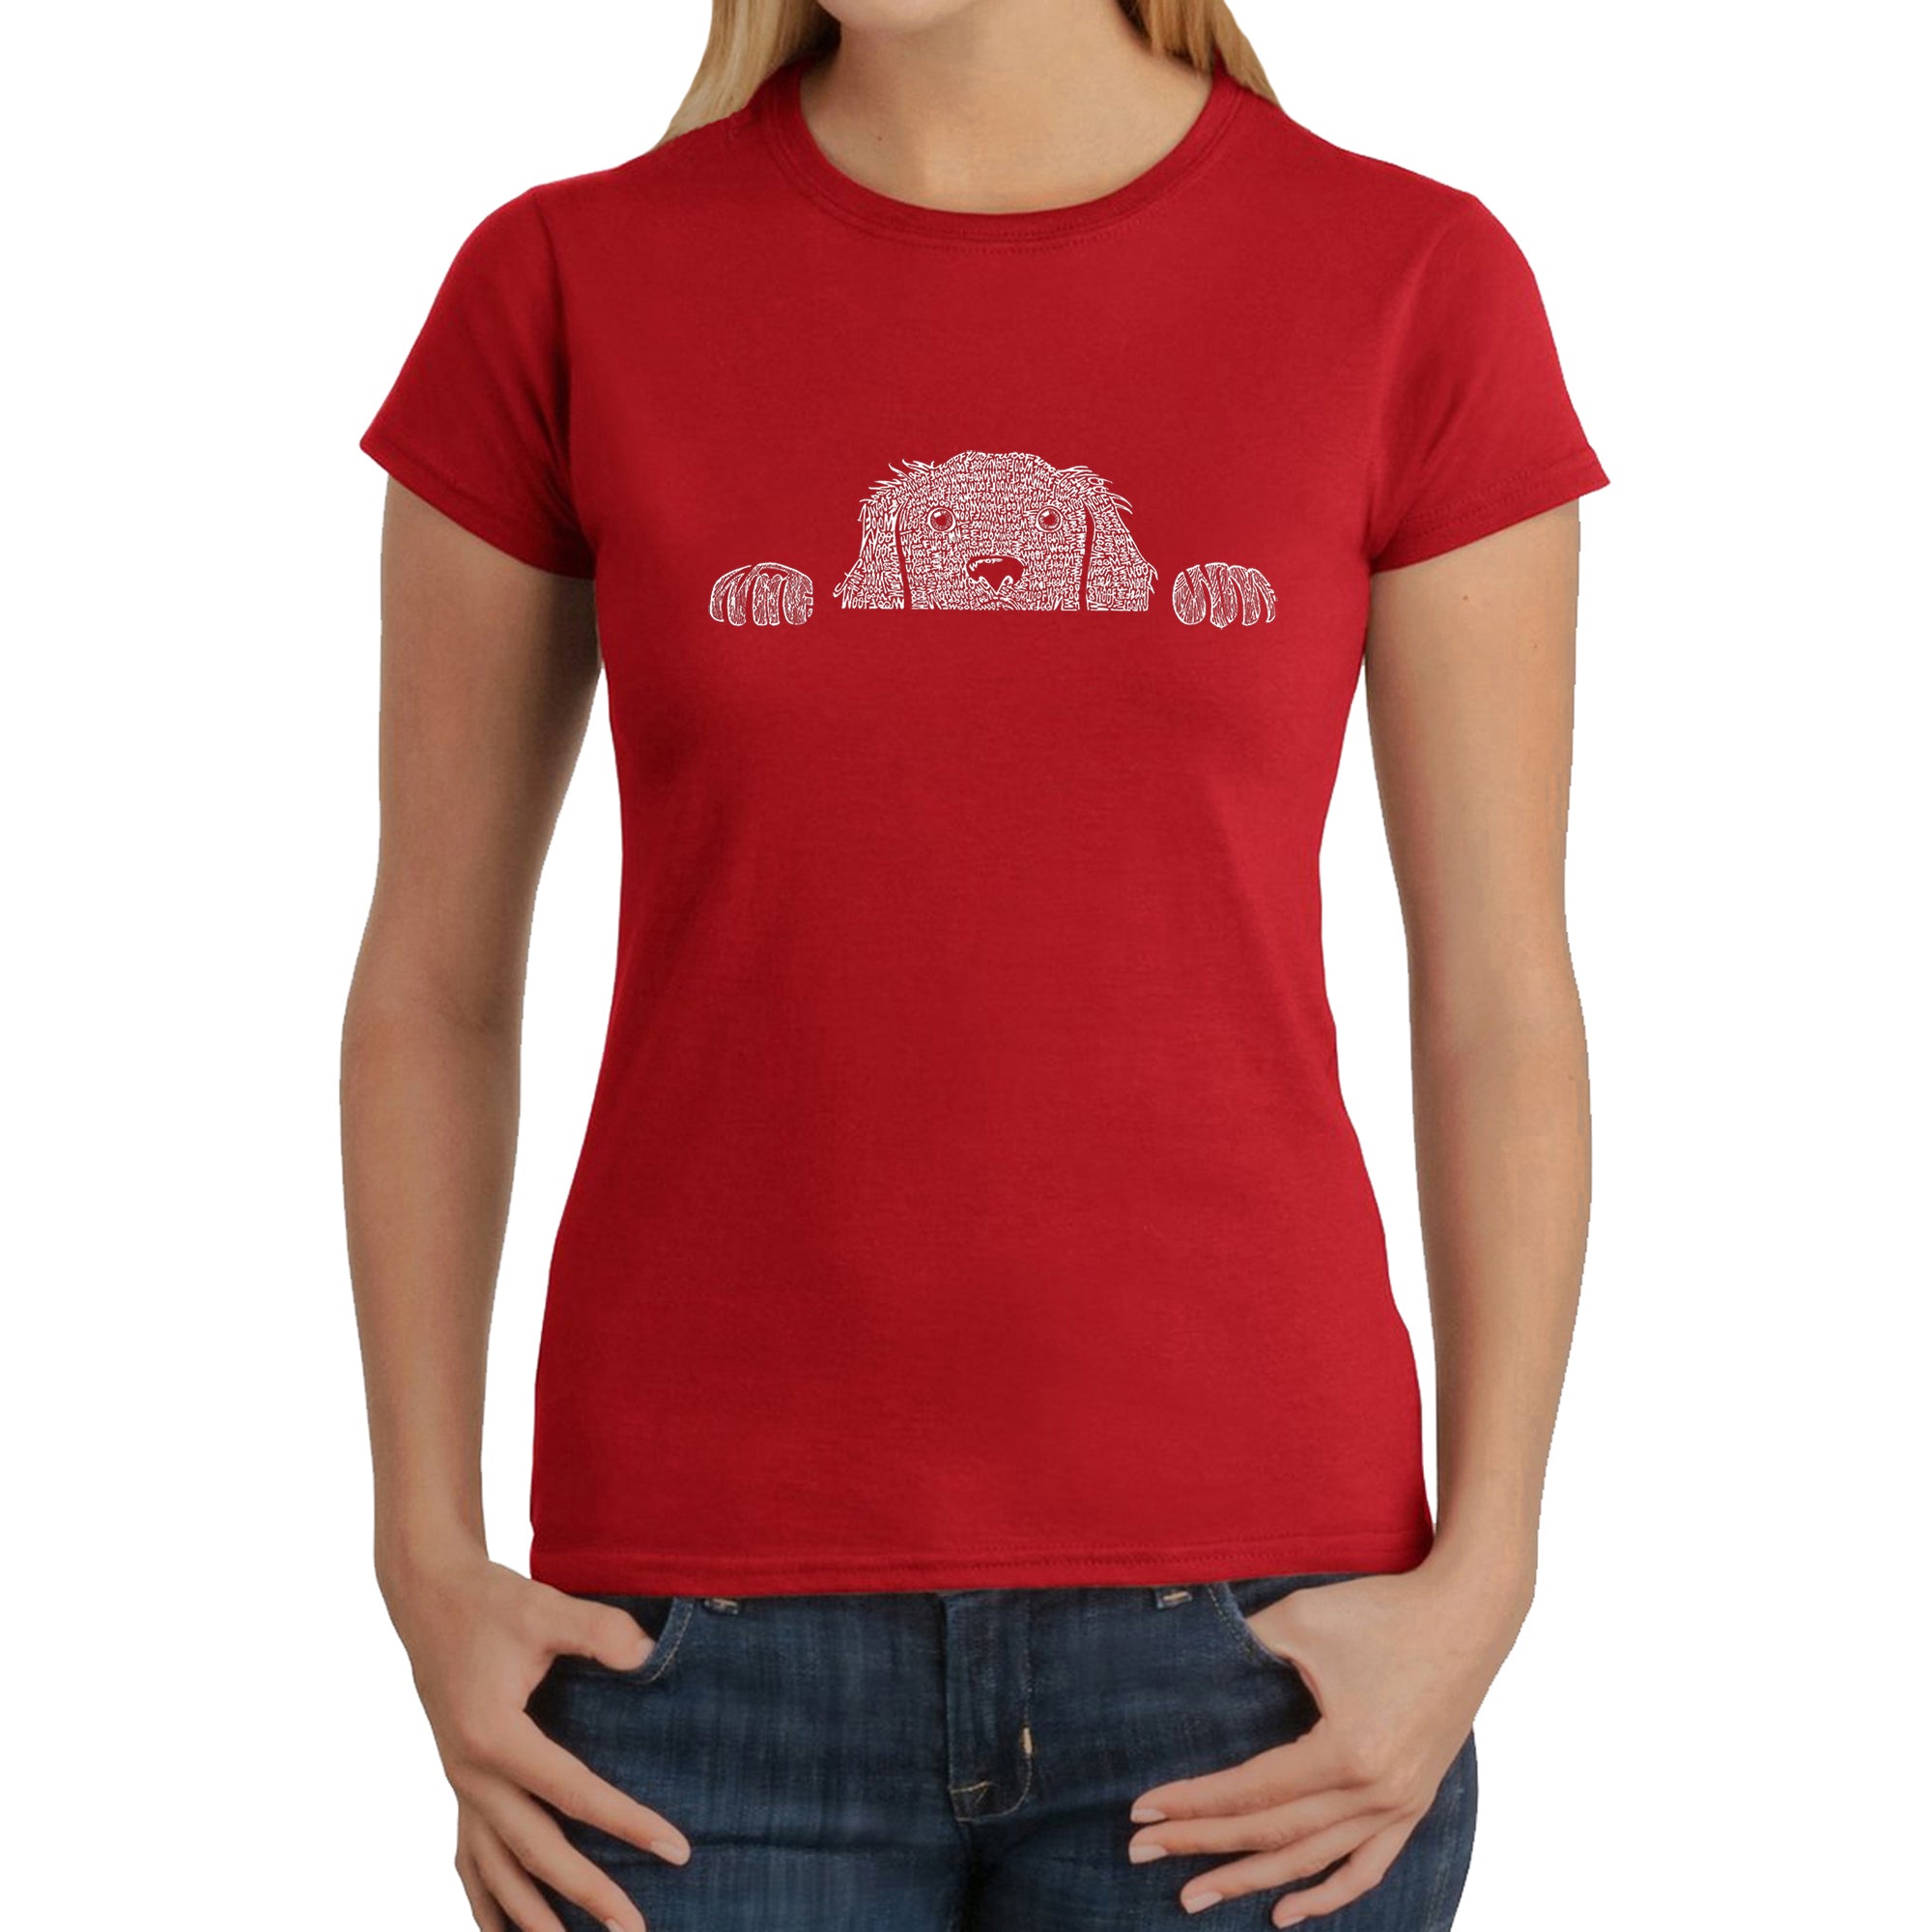 Peeking Dog - Women's Word Art T-Shirt - Red - Small